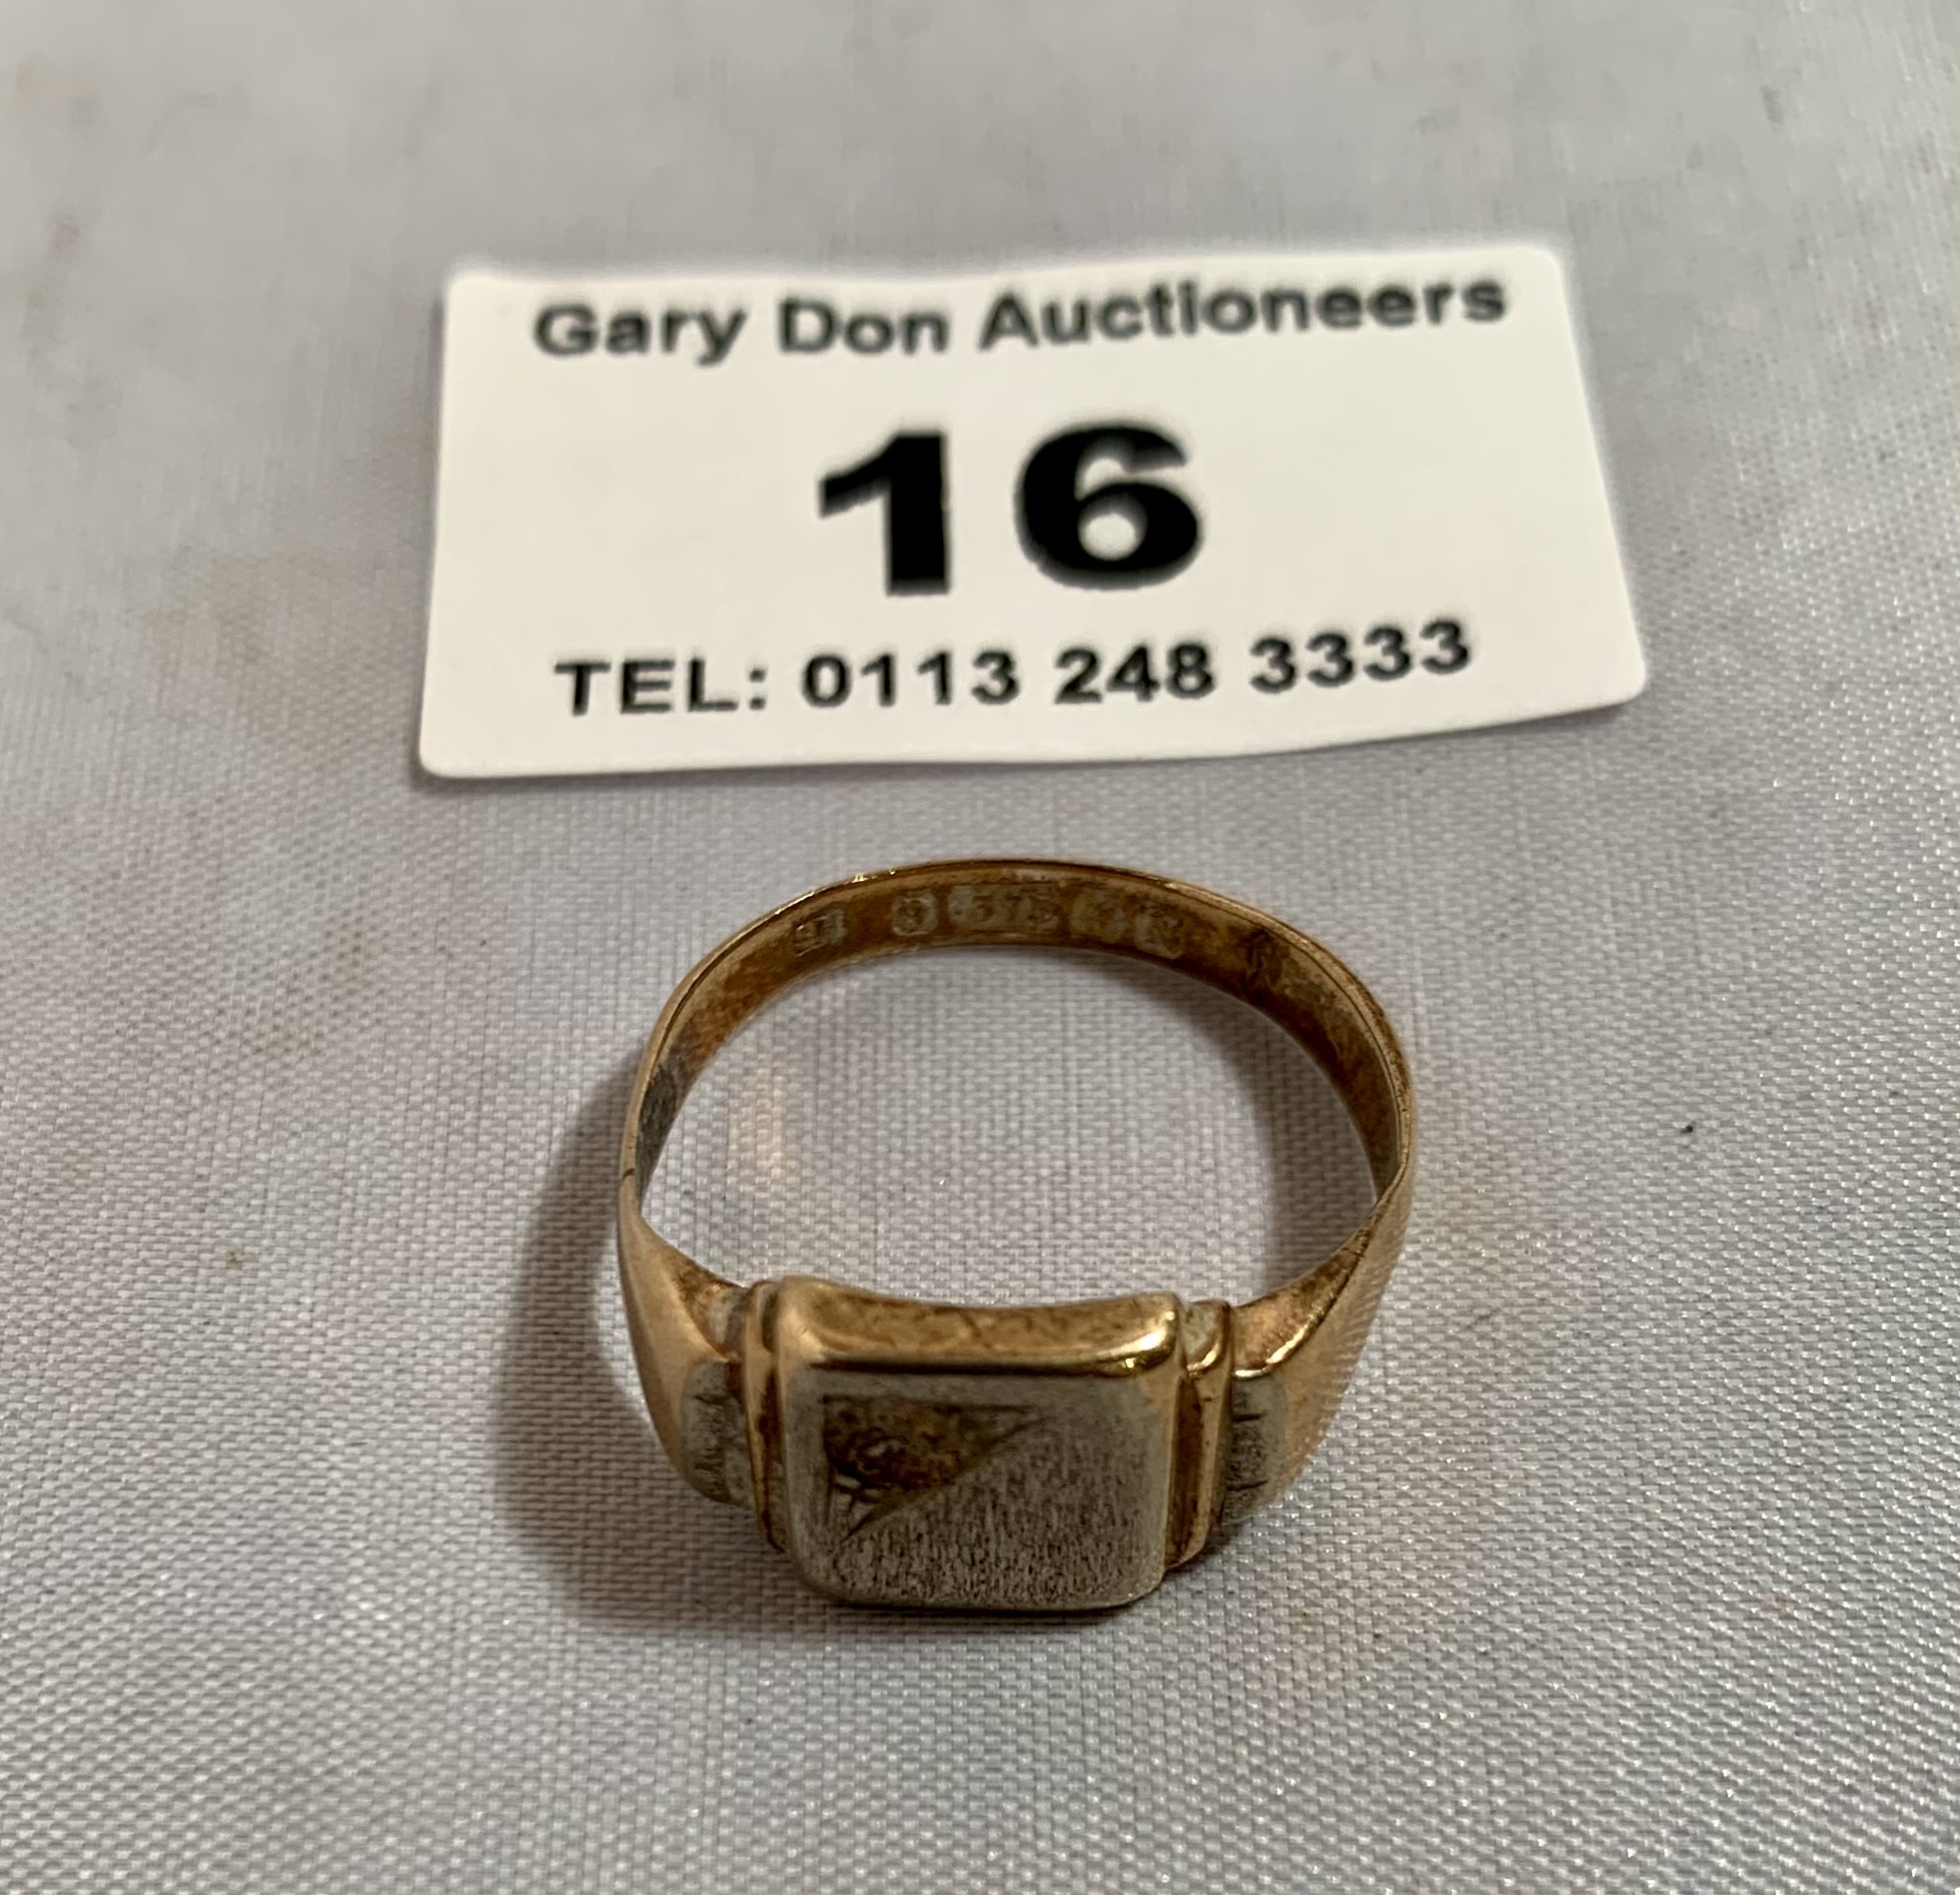 9k gold signet ring, w:4.3 grams, size P